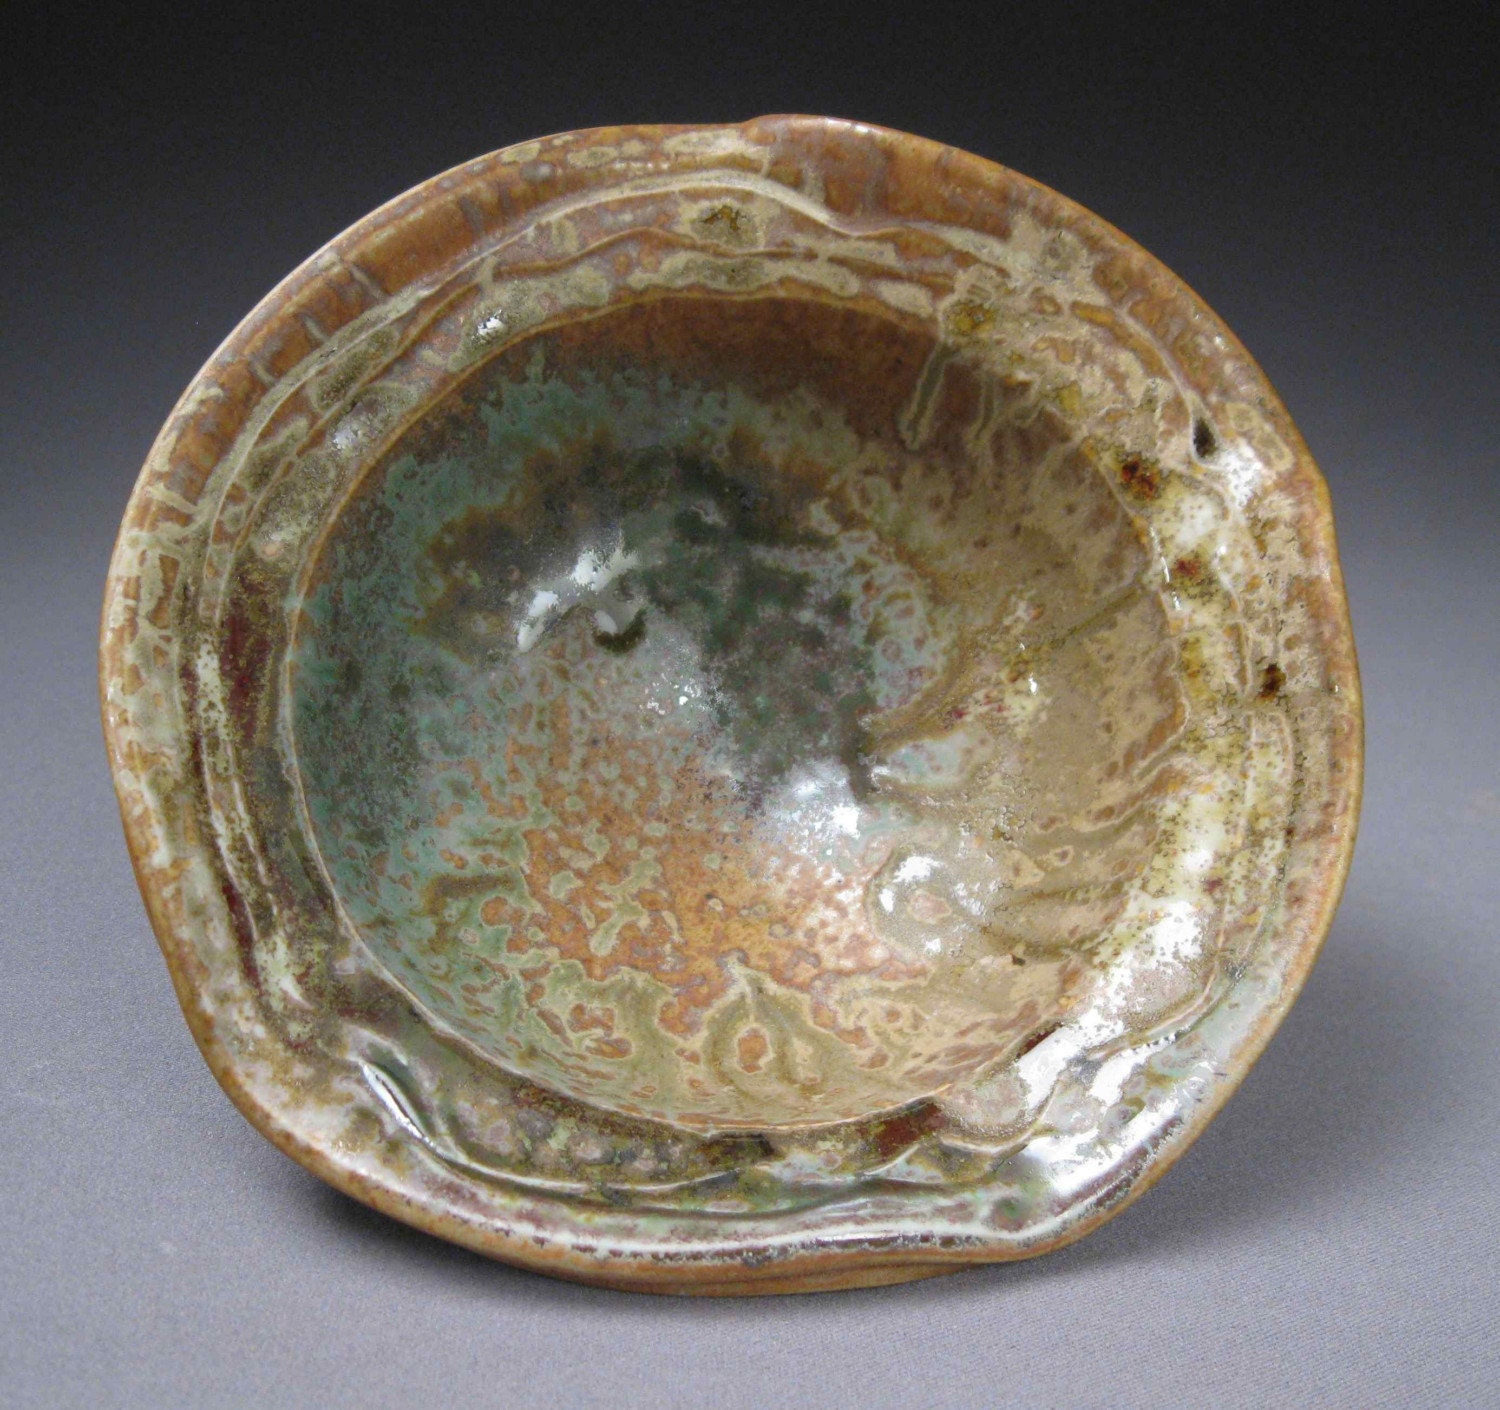 green and orange porcelain bowl